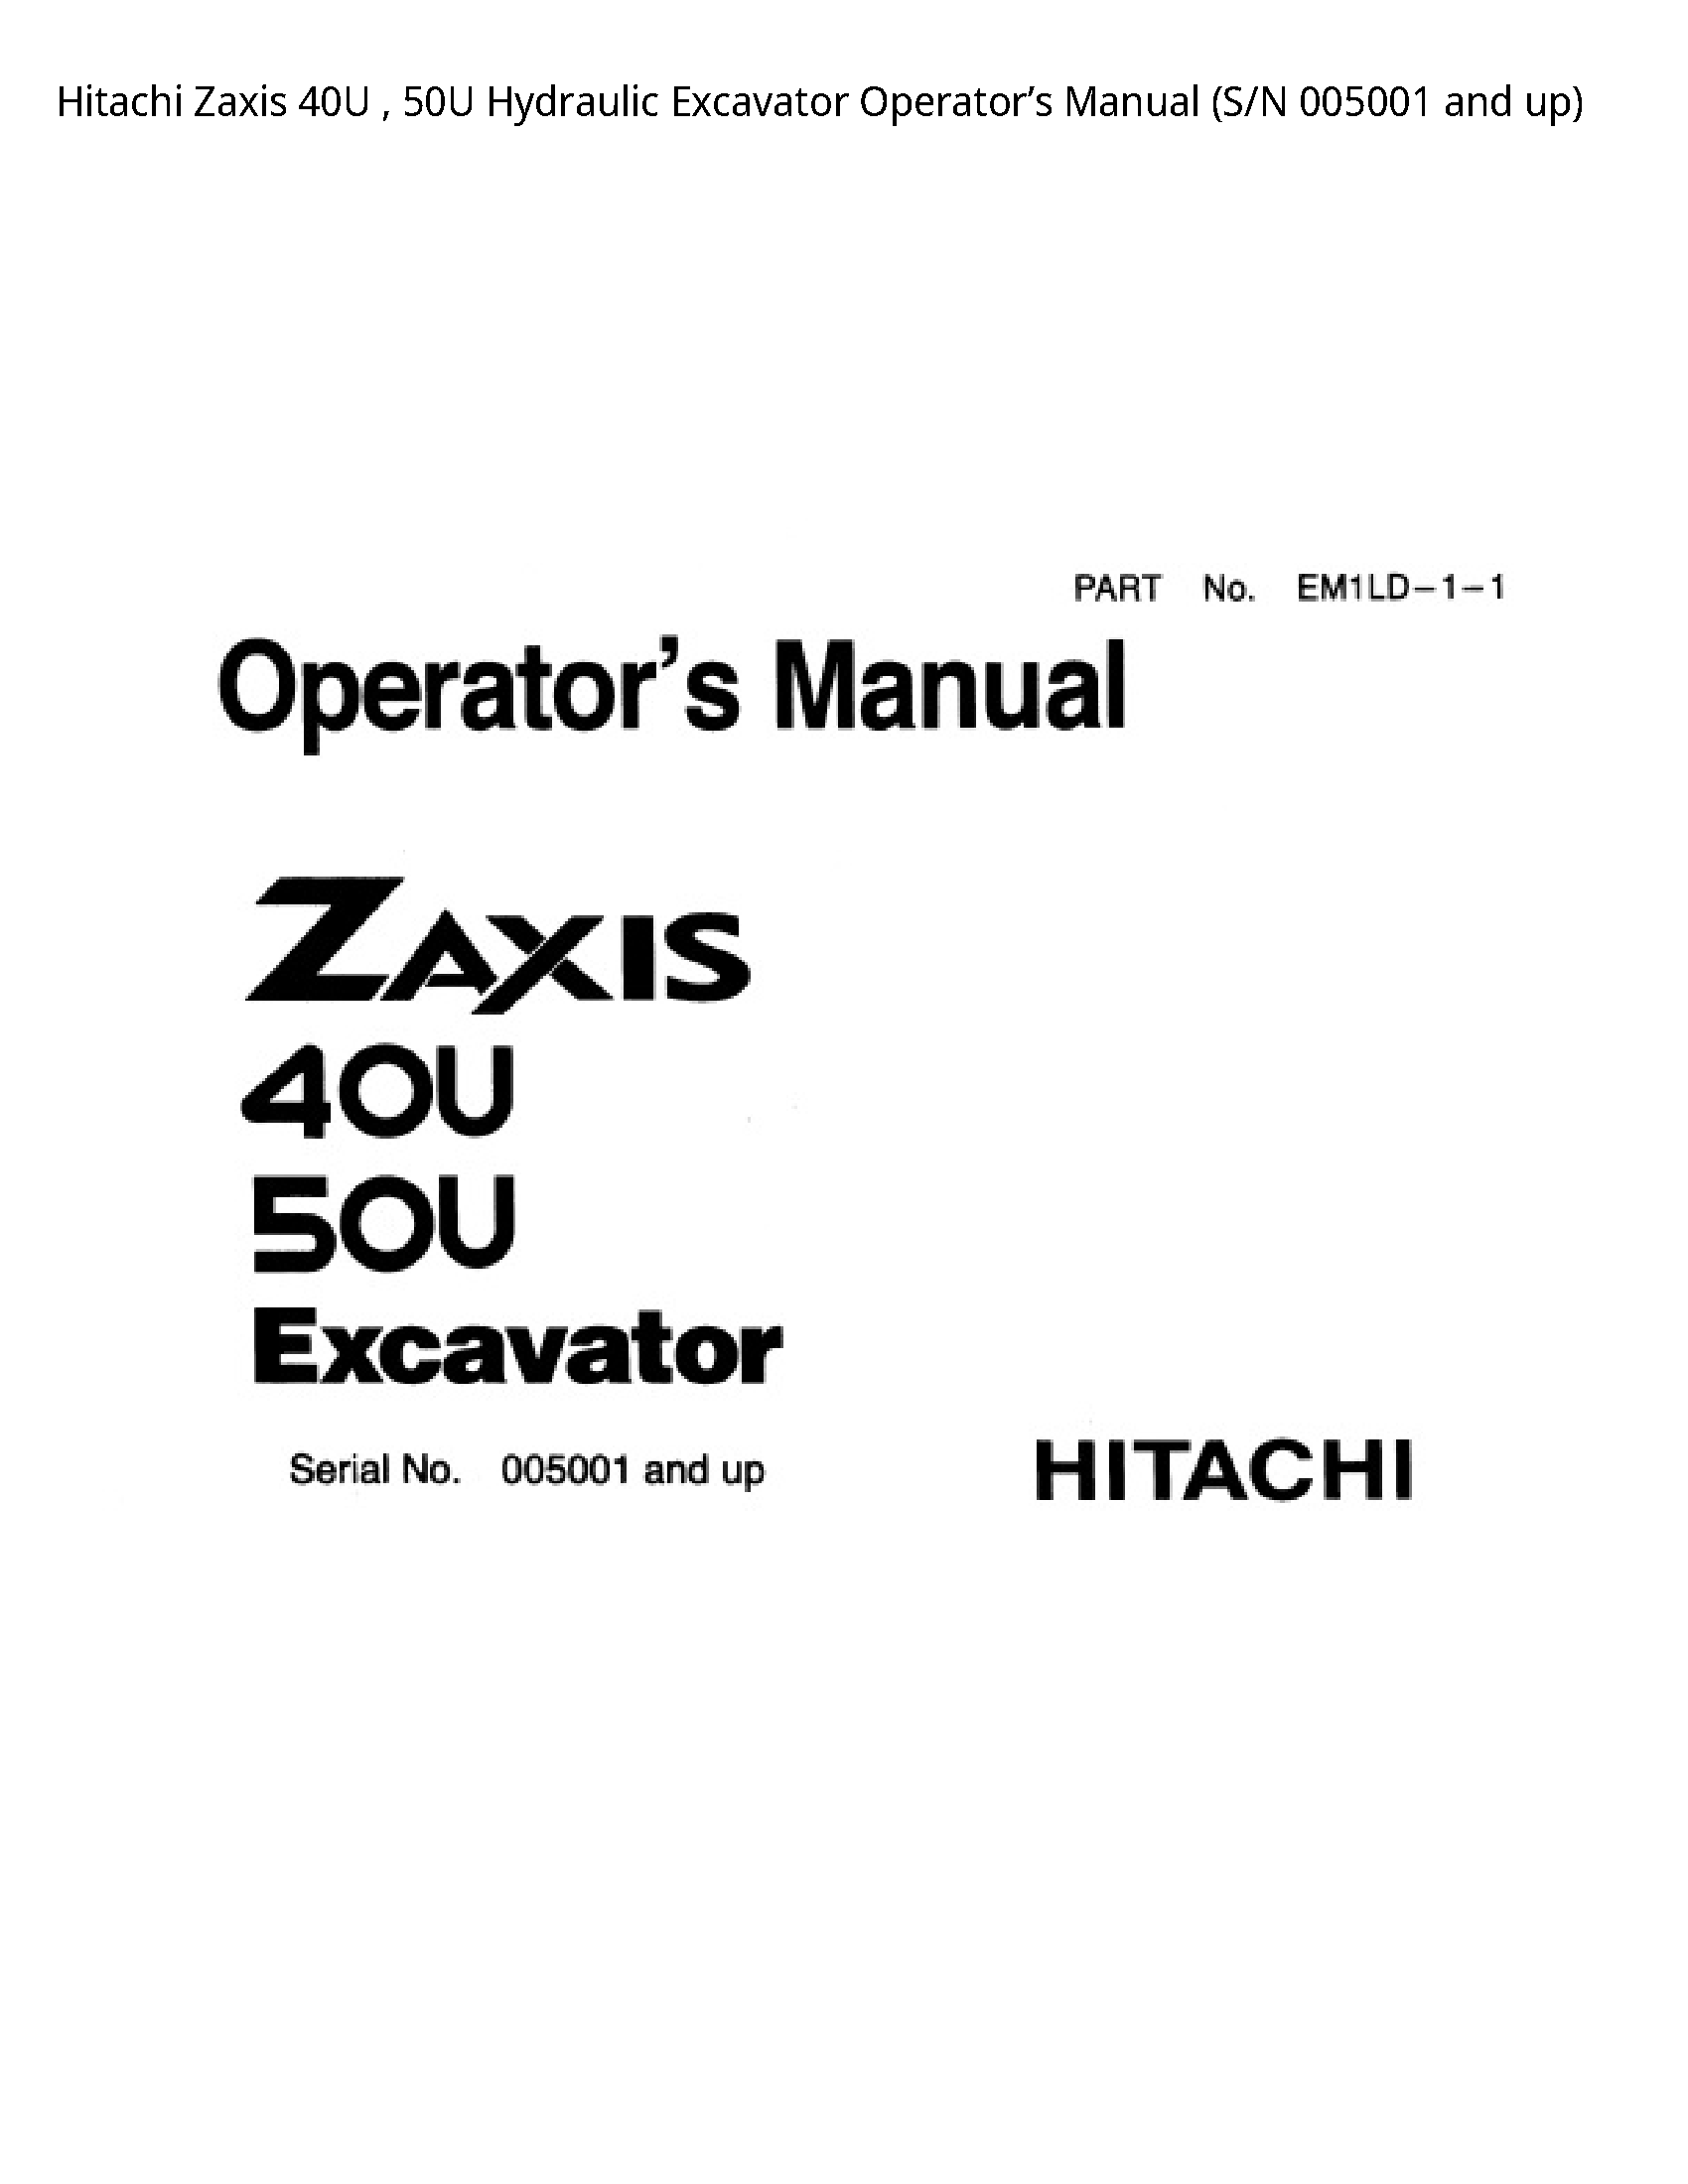 Hitachi 40U Zaxis Hydraulic Excavator Operator’s manual